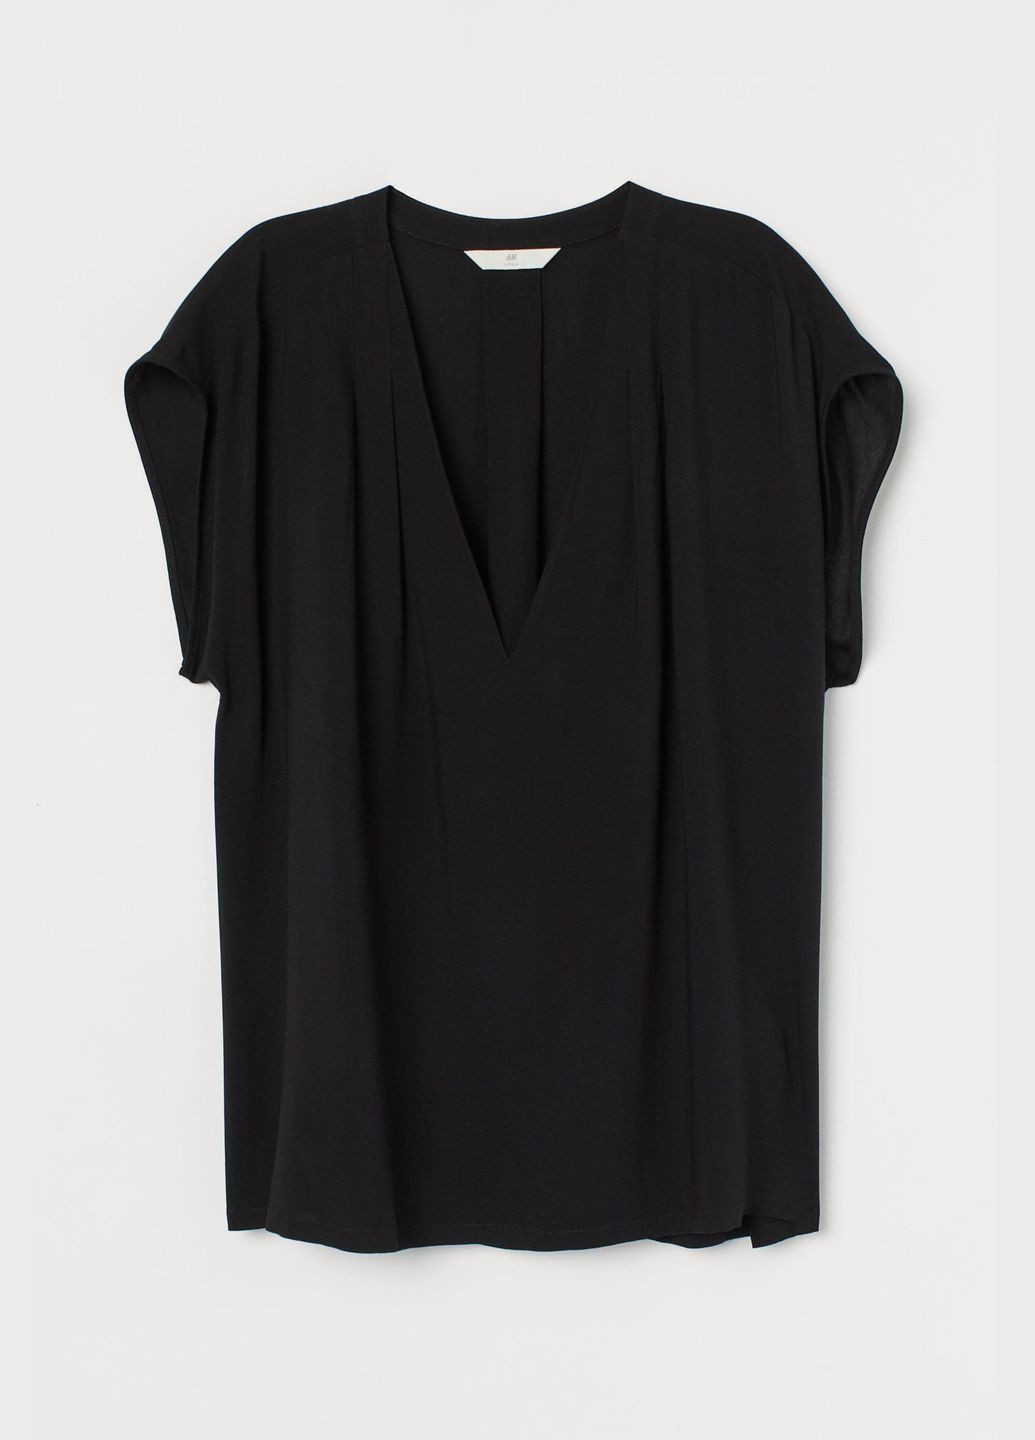 Чёрная блуза лето,черный, H&M